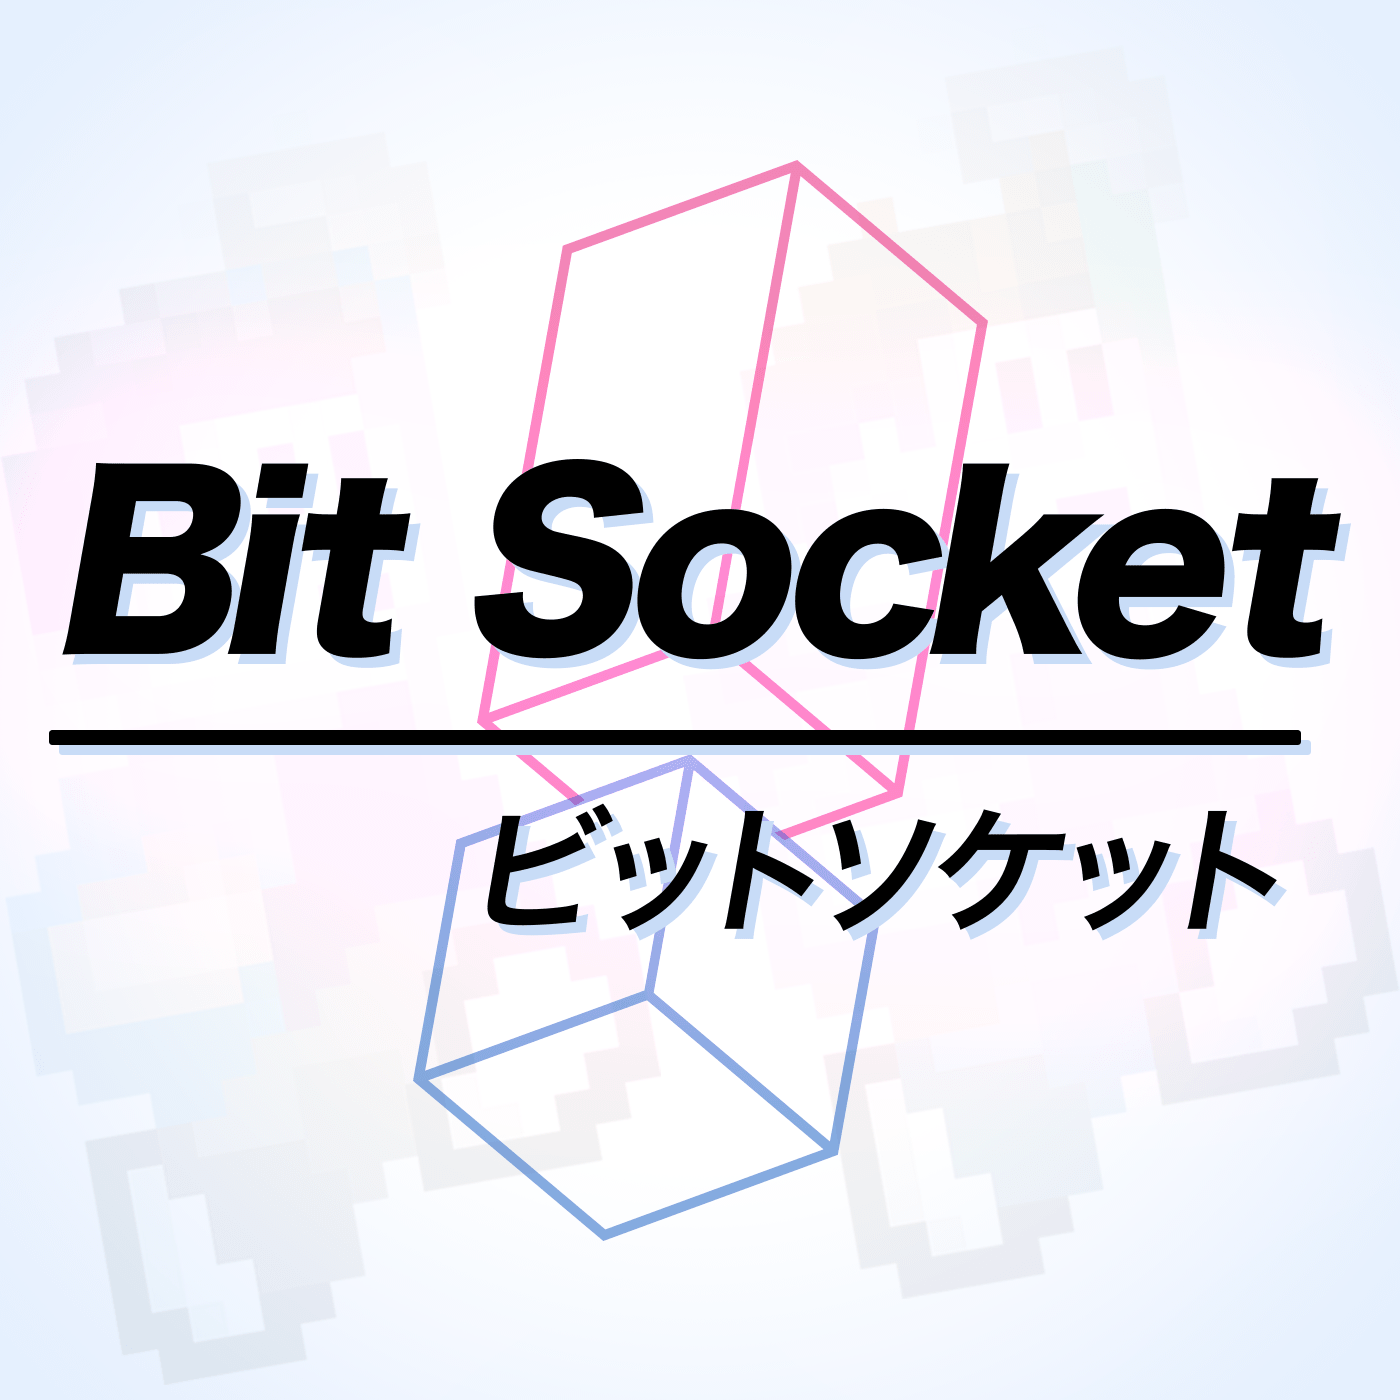 Episode 90: Keep Bit Socketin'